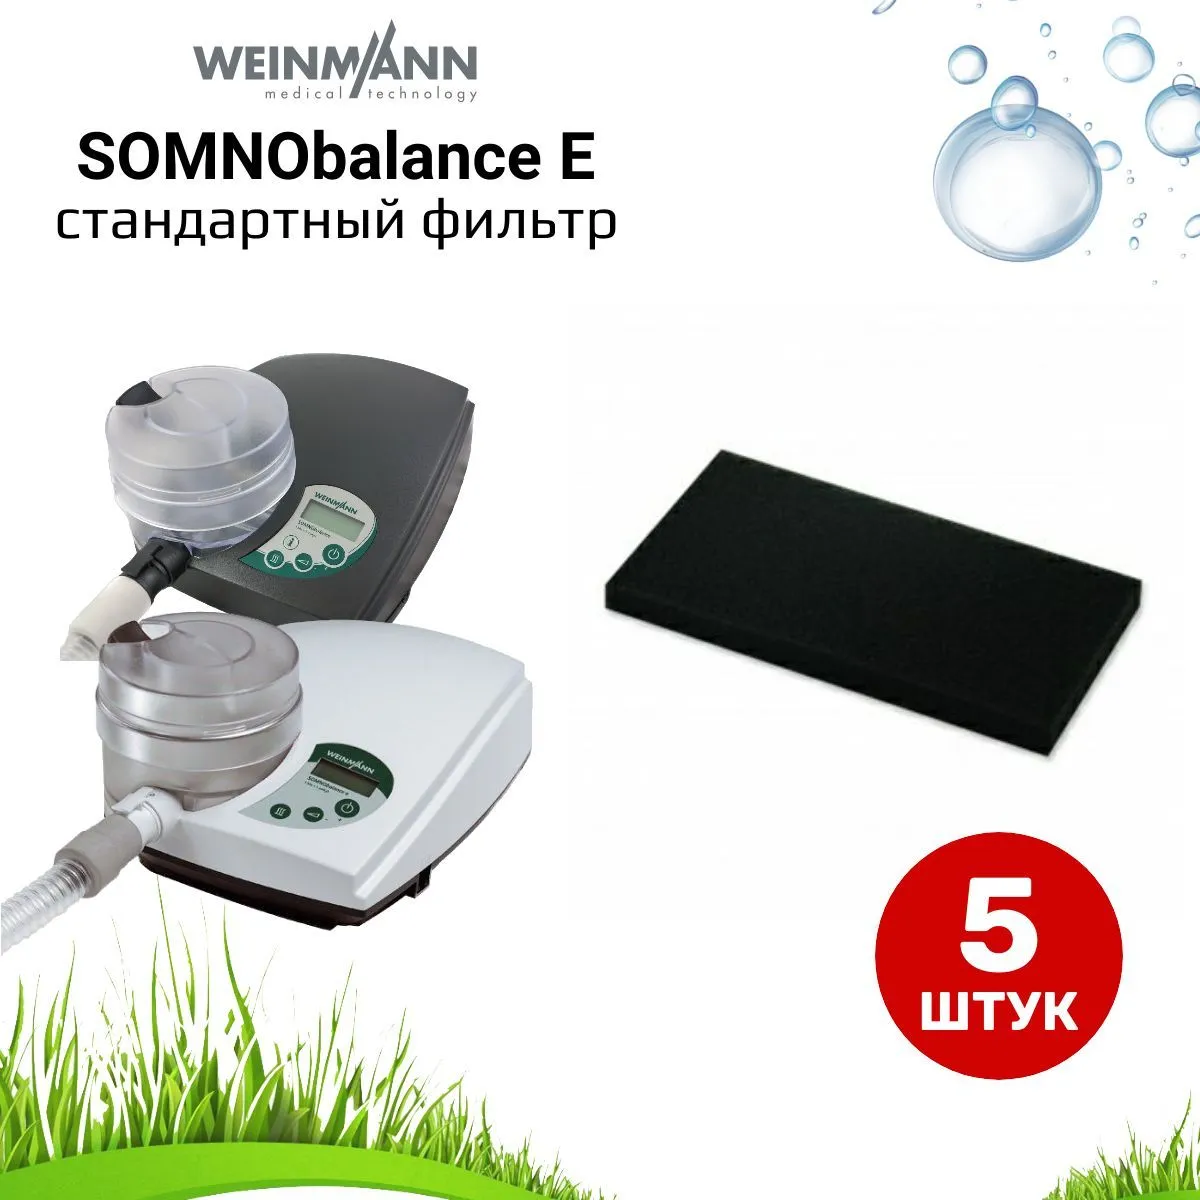 Weinmann SOMNObalance E стандартный фильтр (5 штук) для сипап